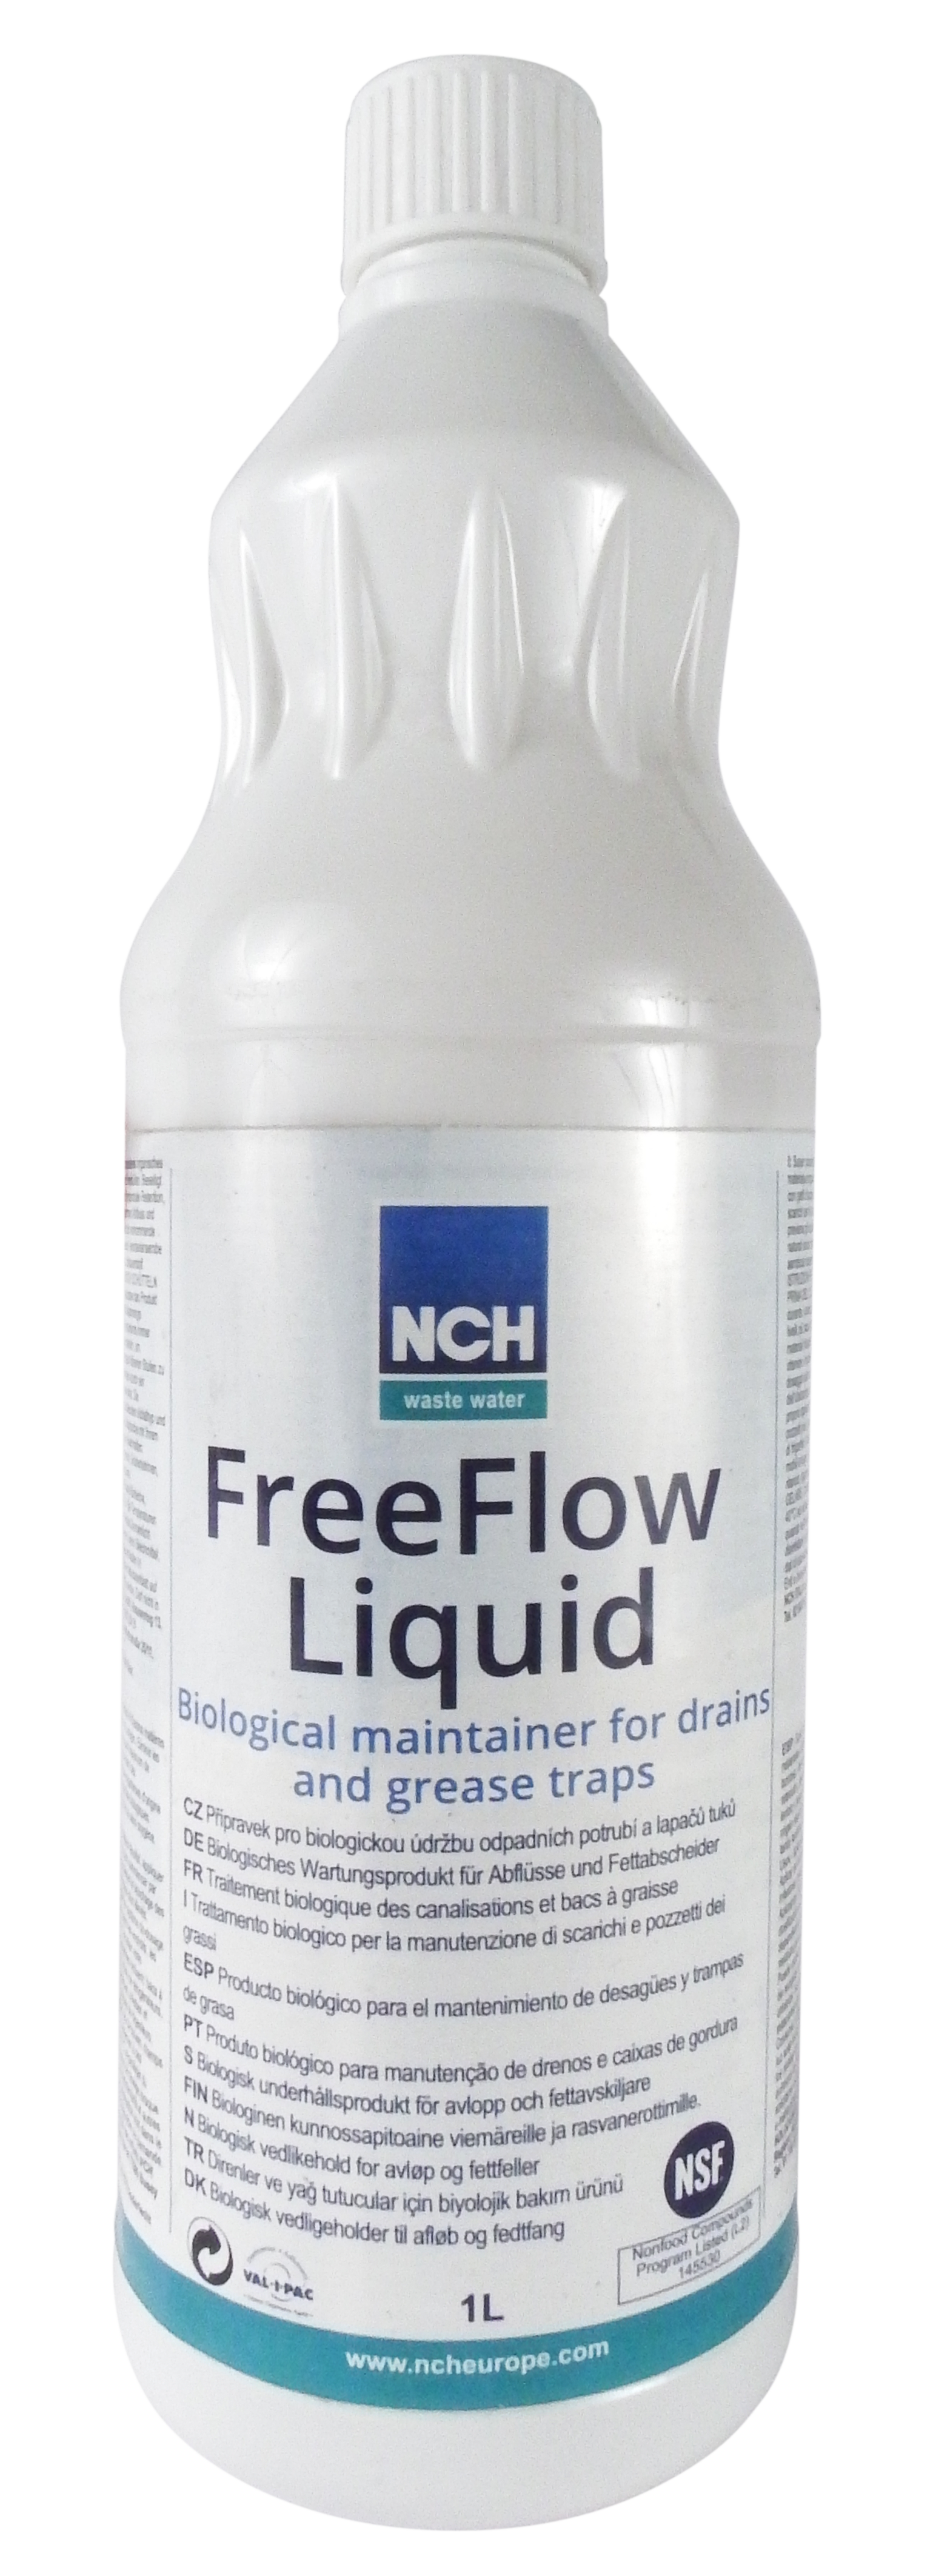 FreeFlow Liquid